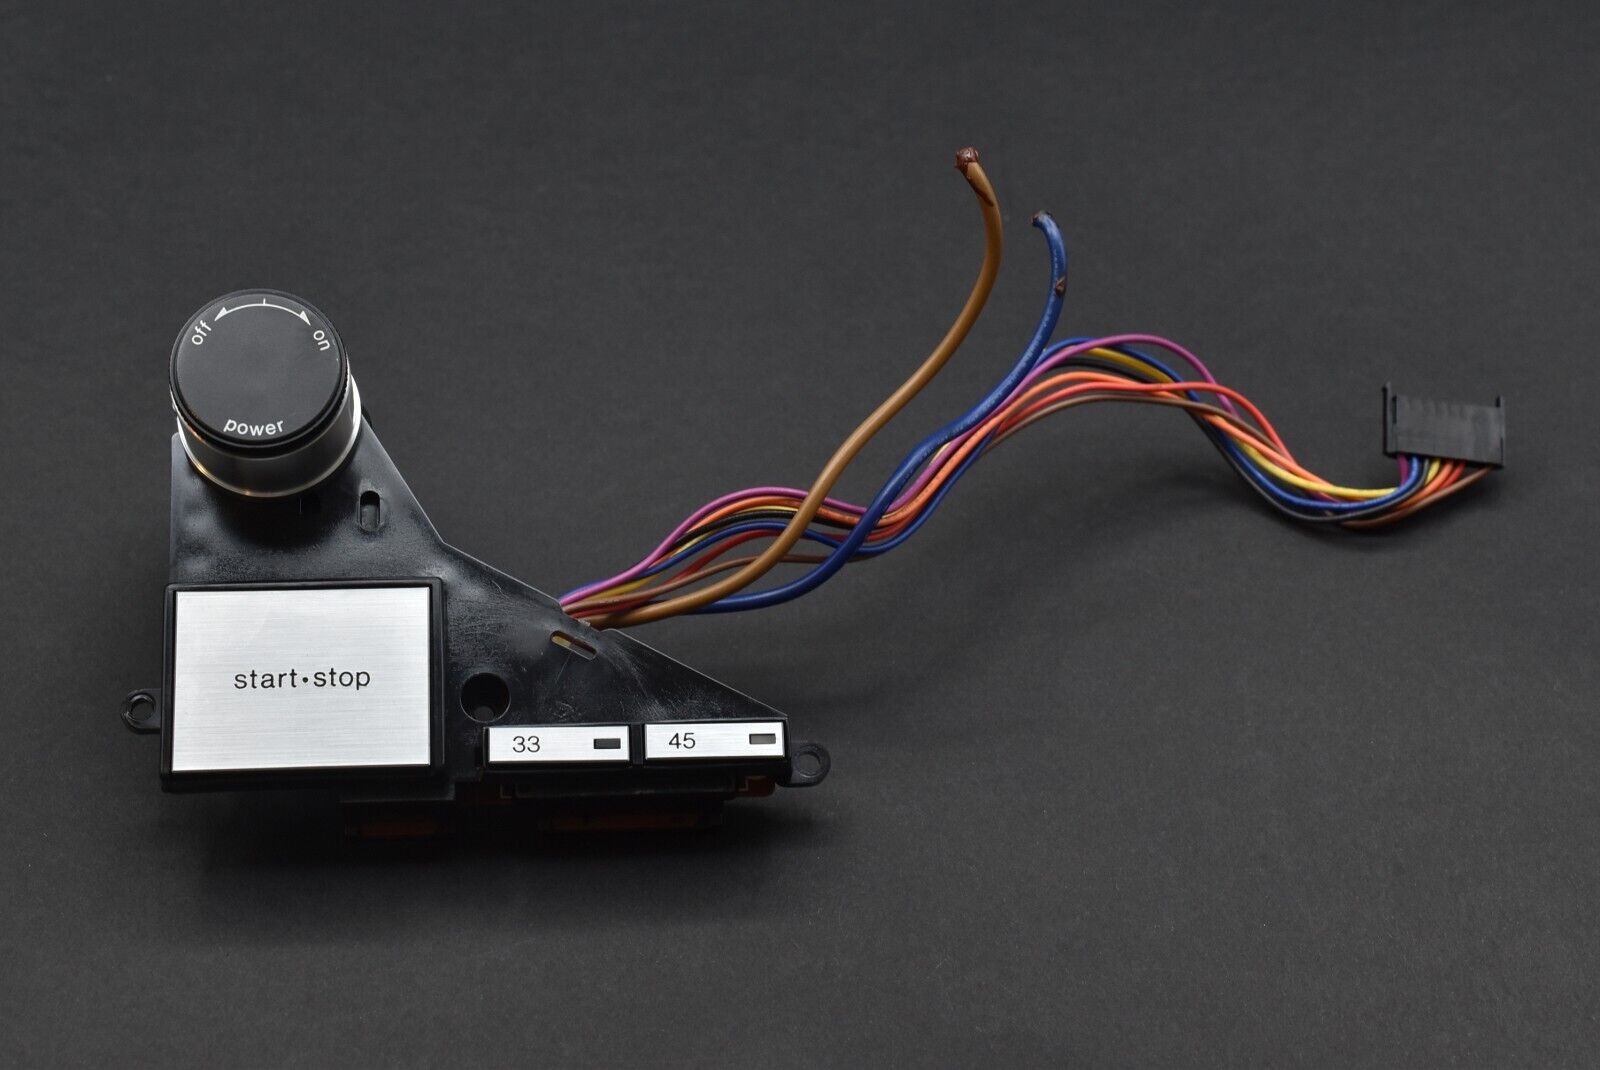 Technics SL-1200/SL-1210 MK2 On/Off Start Switch Power Button